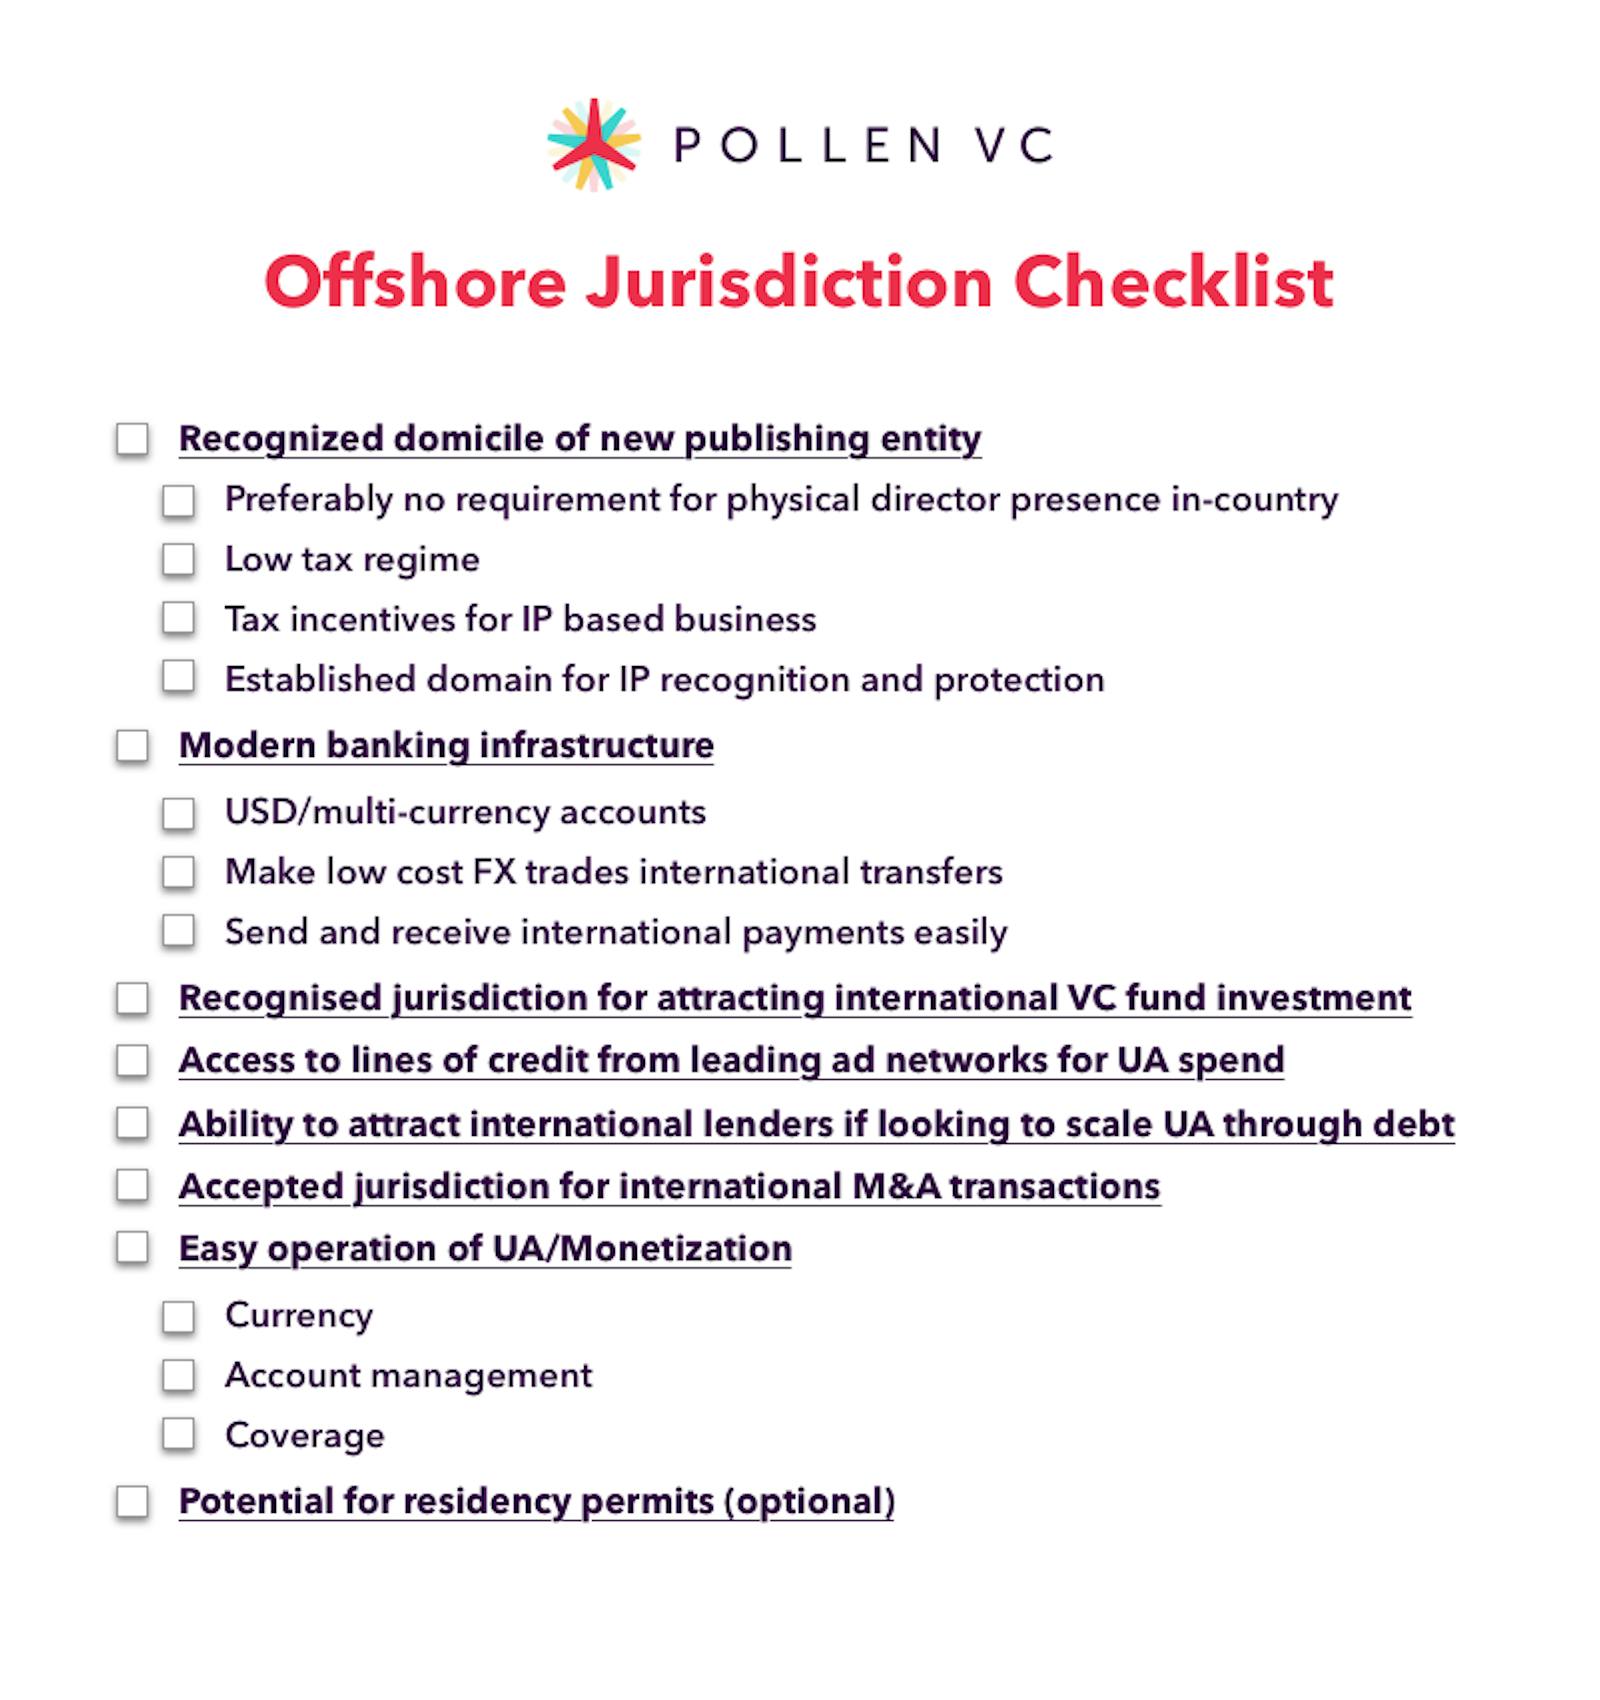 Offshore jurisdiction checklist for success